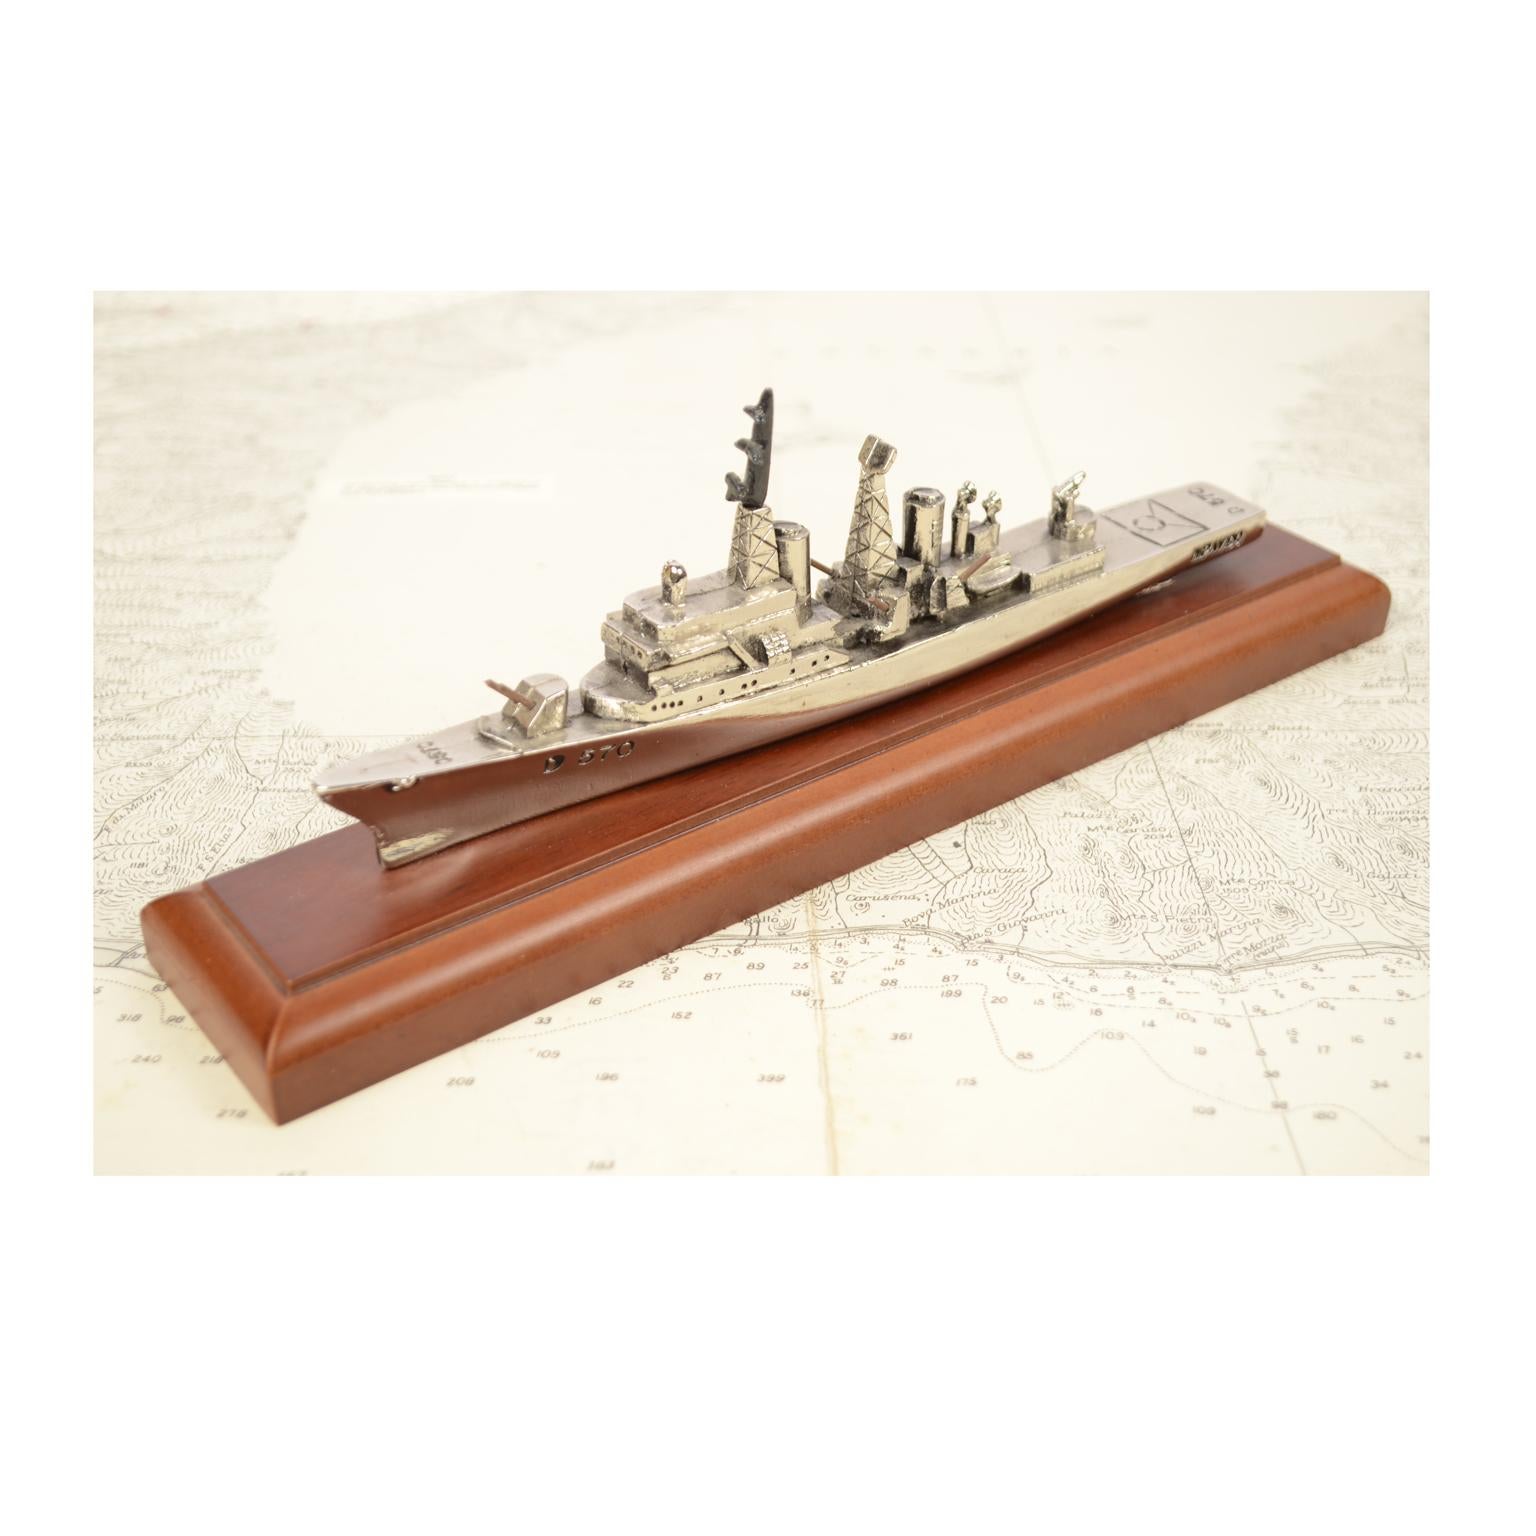 Italian Zama Model of the Ship Impavido Mounted on a Wooden Board